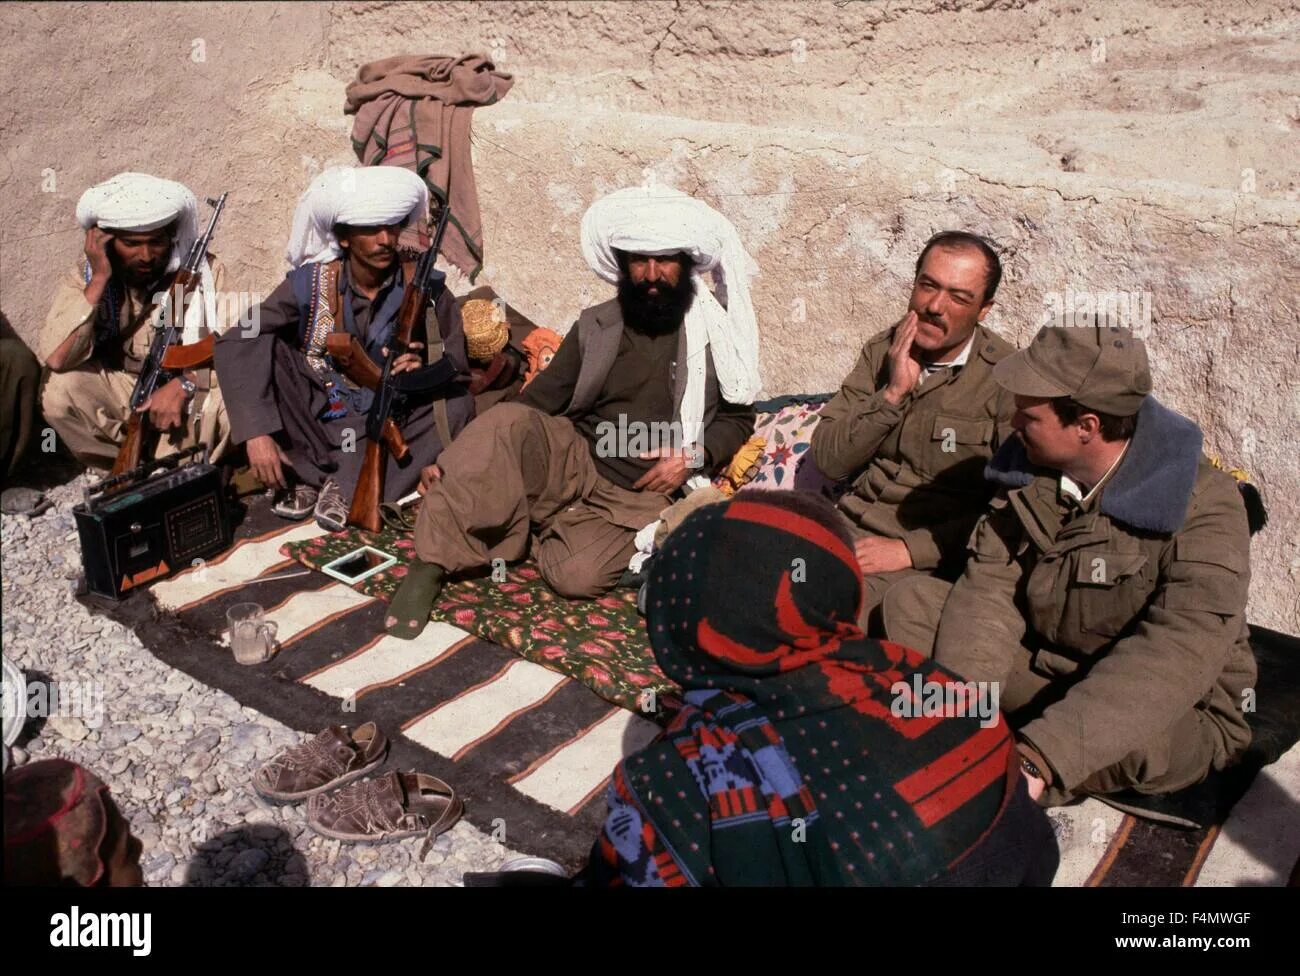 Моджахеды в Афганистане 1979. Талибы Афганистан 1979. Афганские моджахеды 1989. Белуджи в Афганистане.